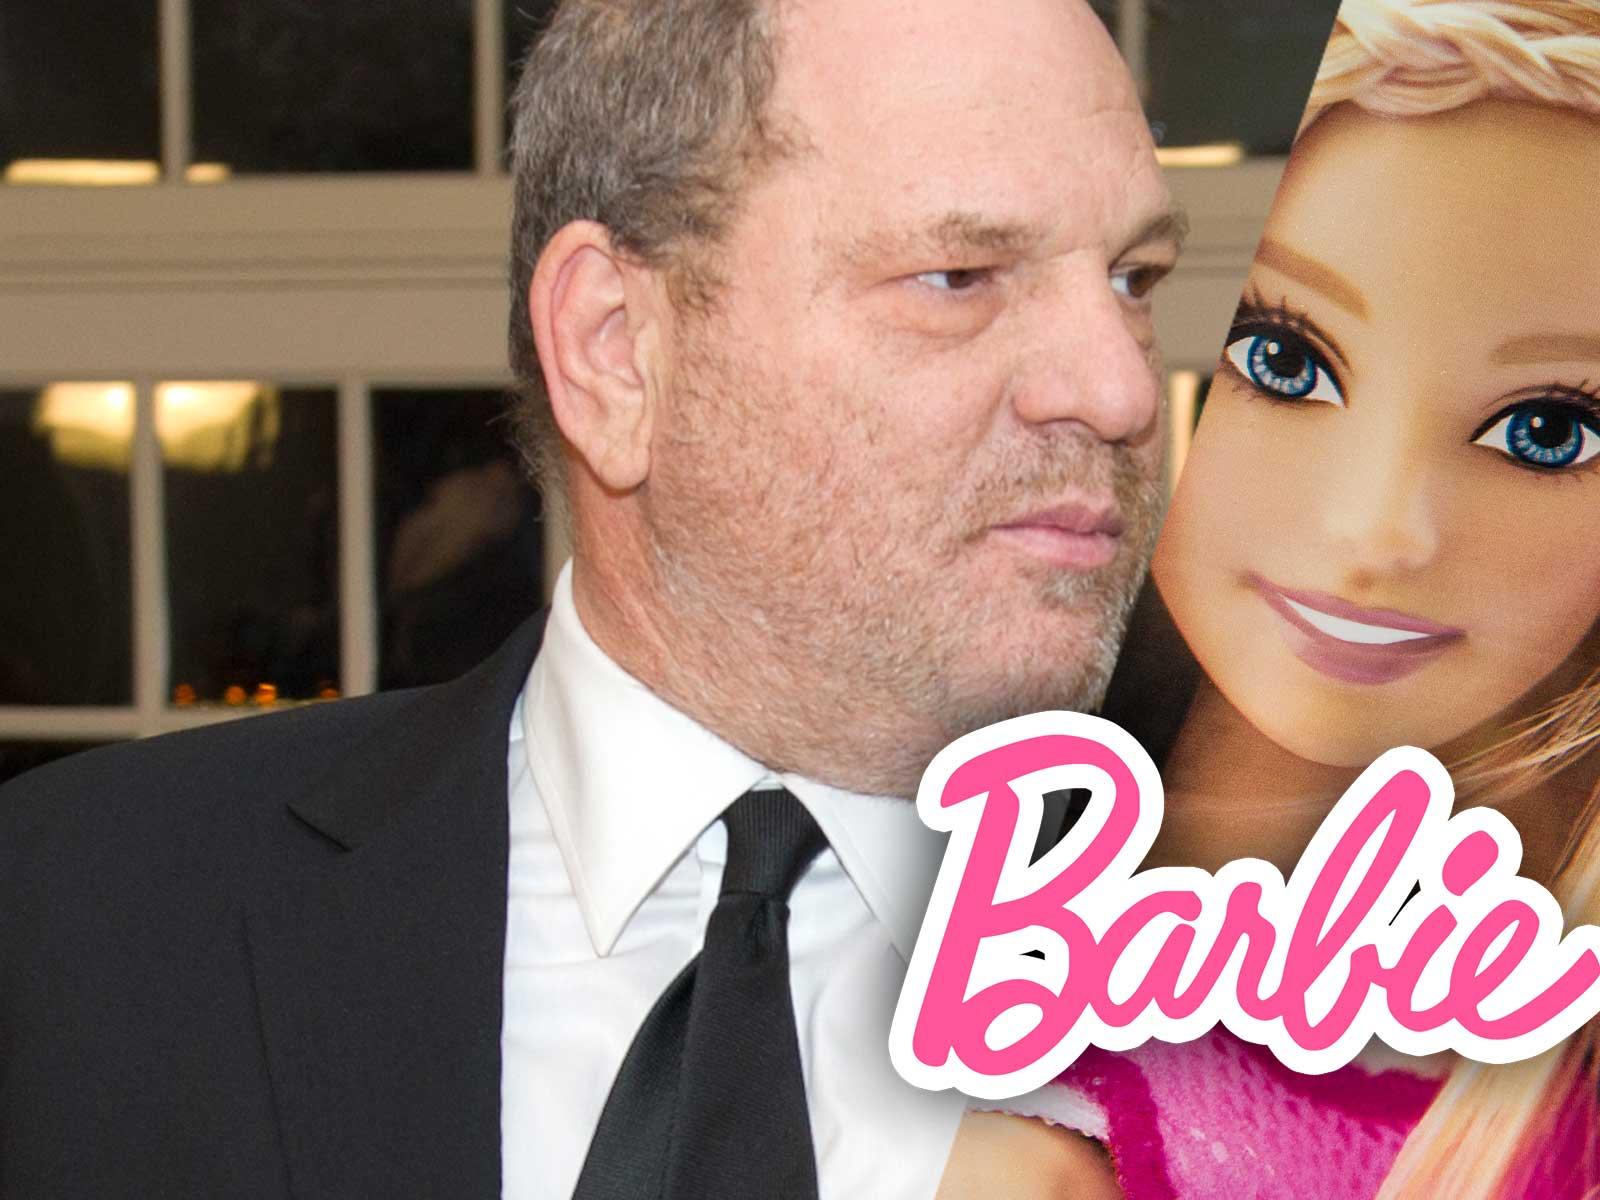 Barbie’s Lawyer Is Now Representing Harvey Weinstein